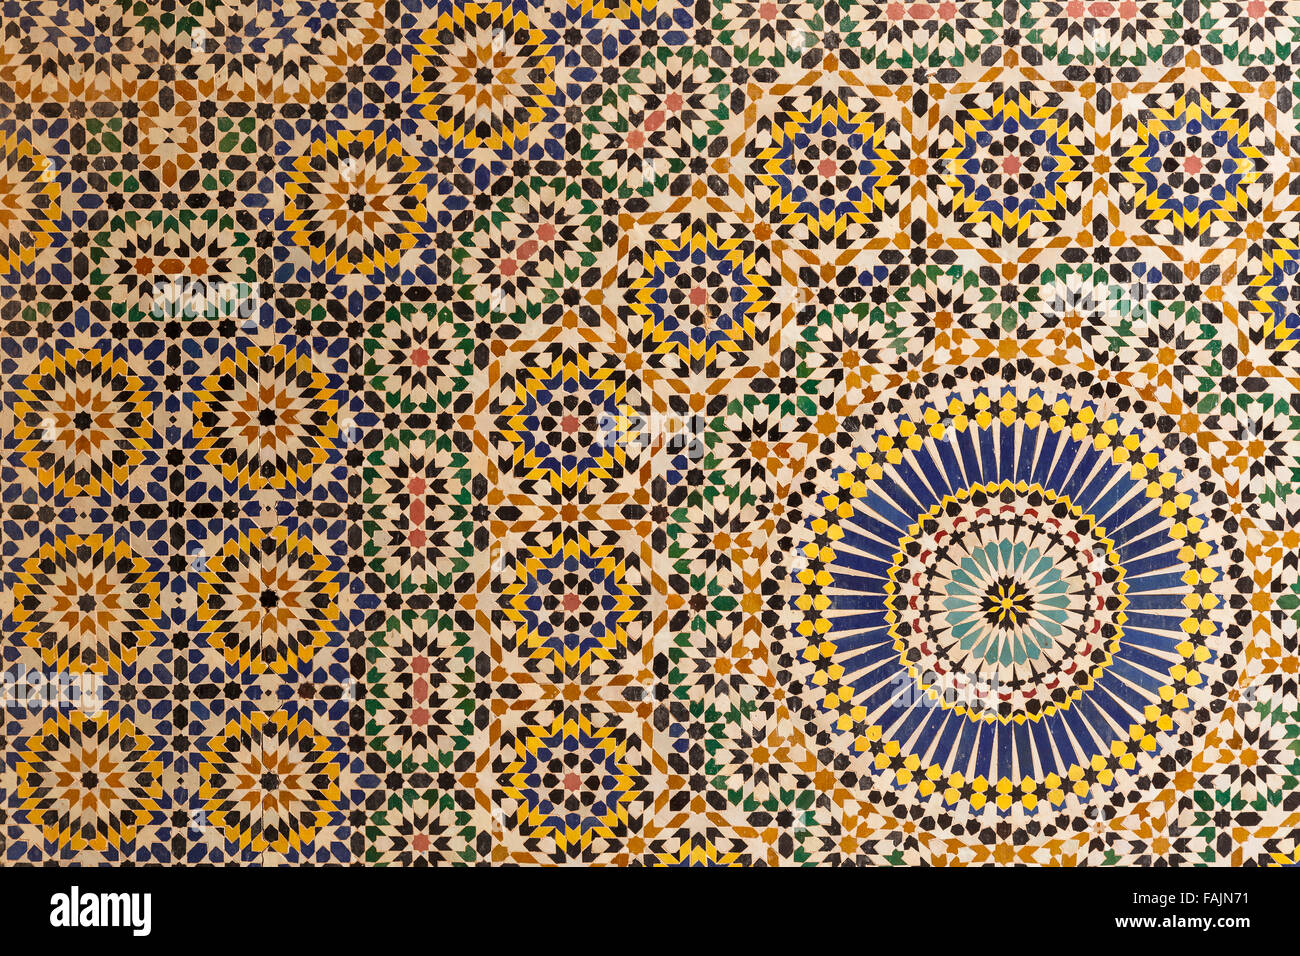 Detail. Telouet kasbah. Morocco. North Africa. Stock Photo